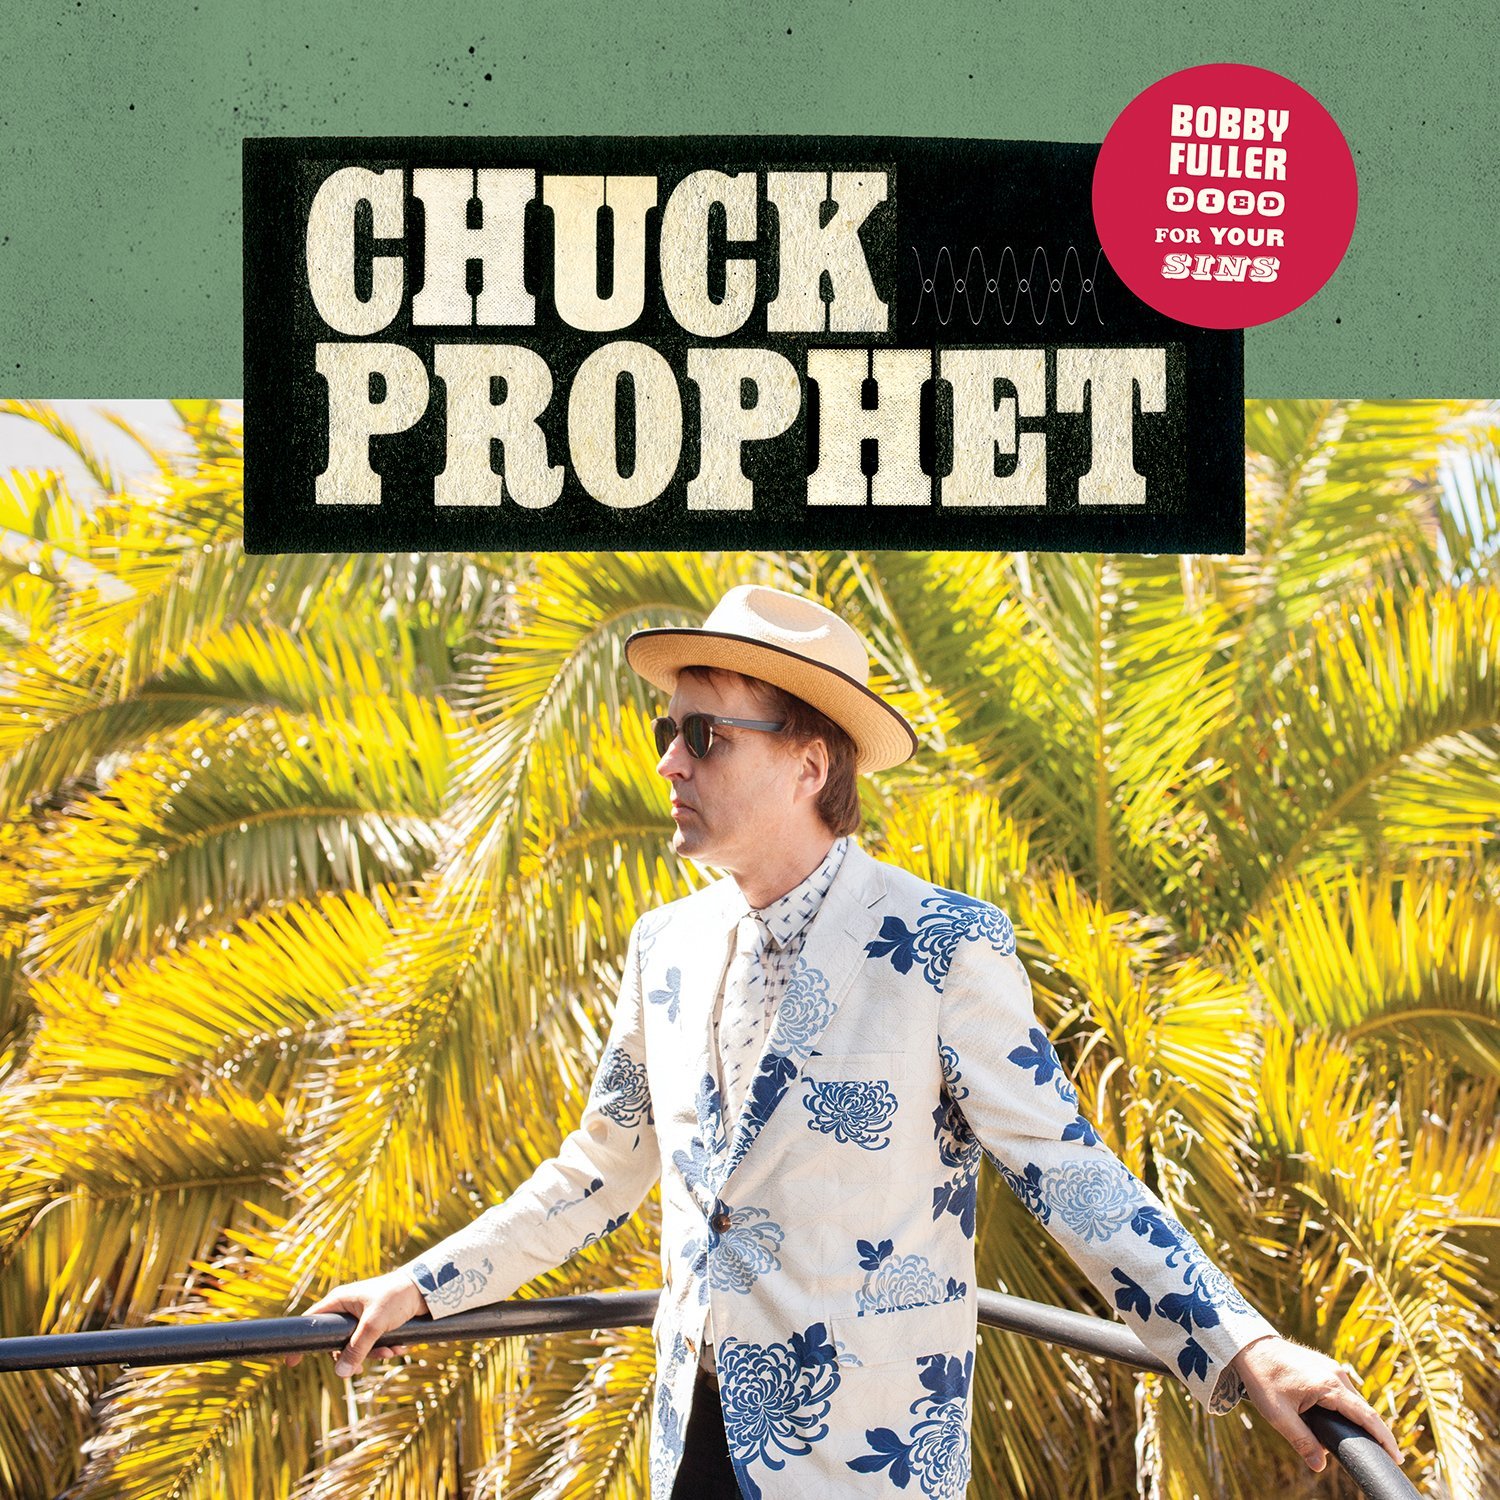 Chuck Prophet – BOBBY FULLER DIED FOR YOUR SINS; VÖ: 10.02.2017